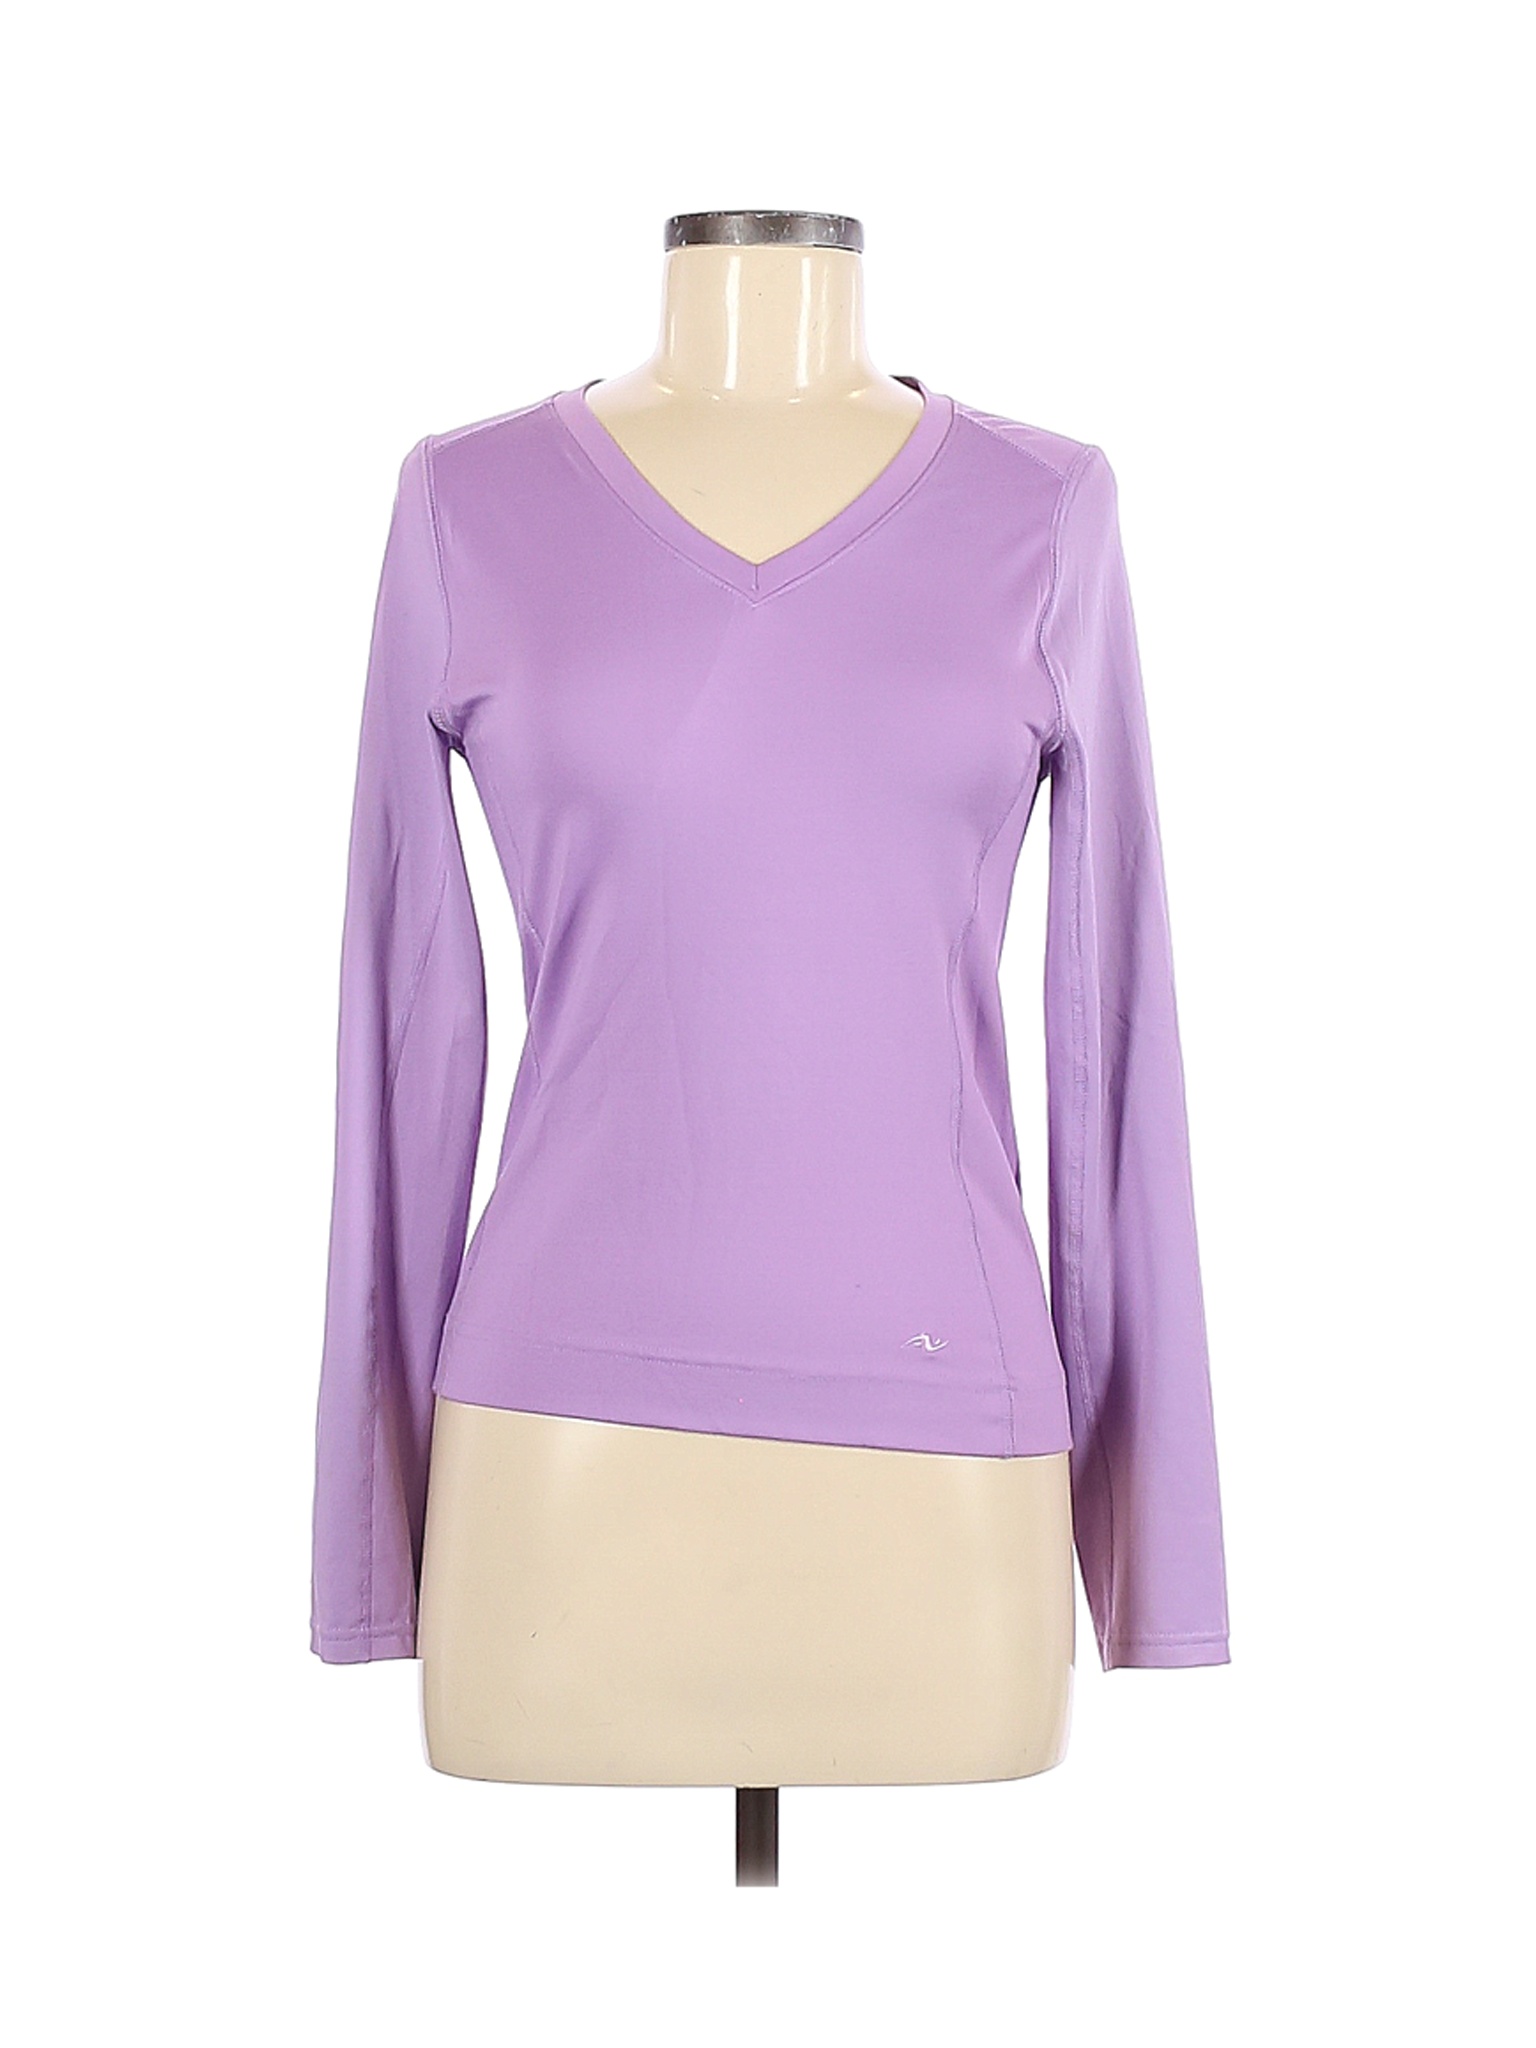 Unbranded Women Purple Active T-Shirt S | eBay